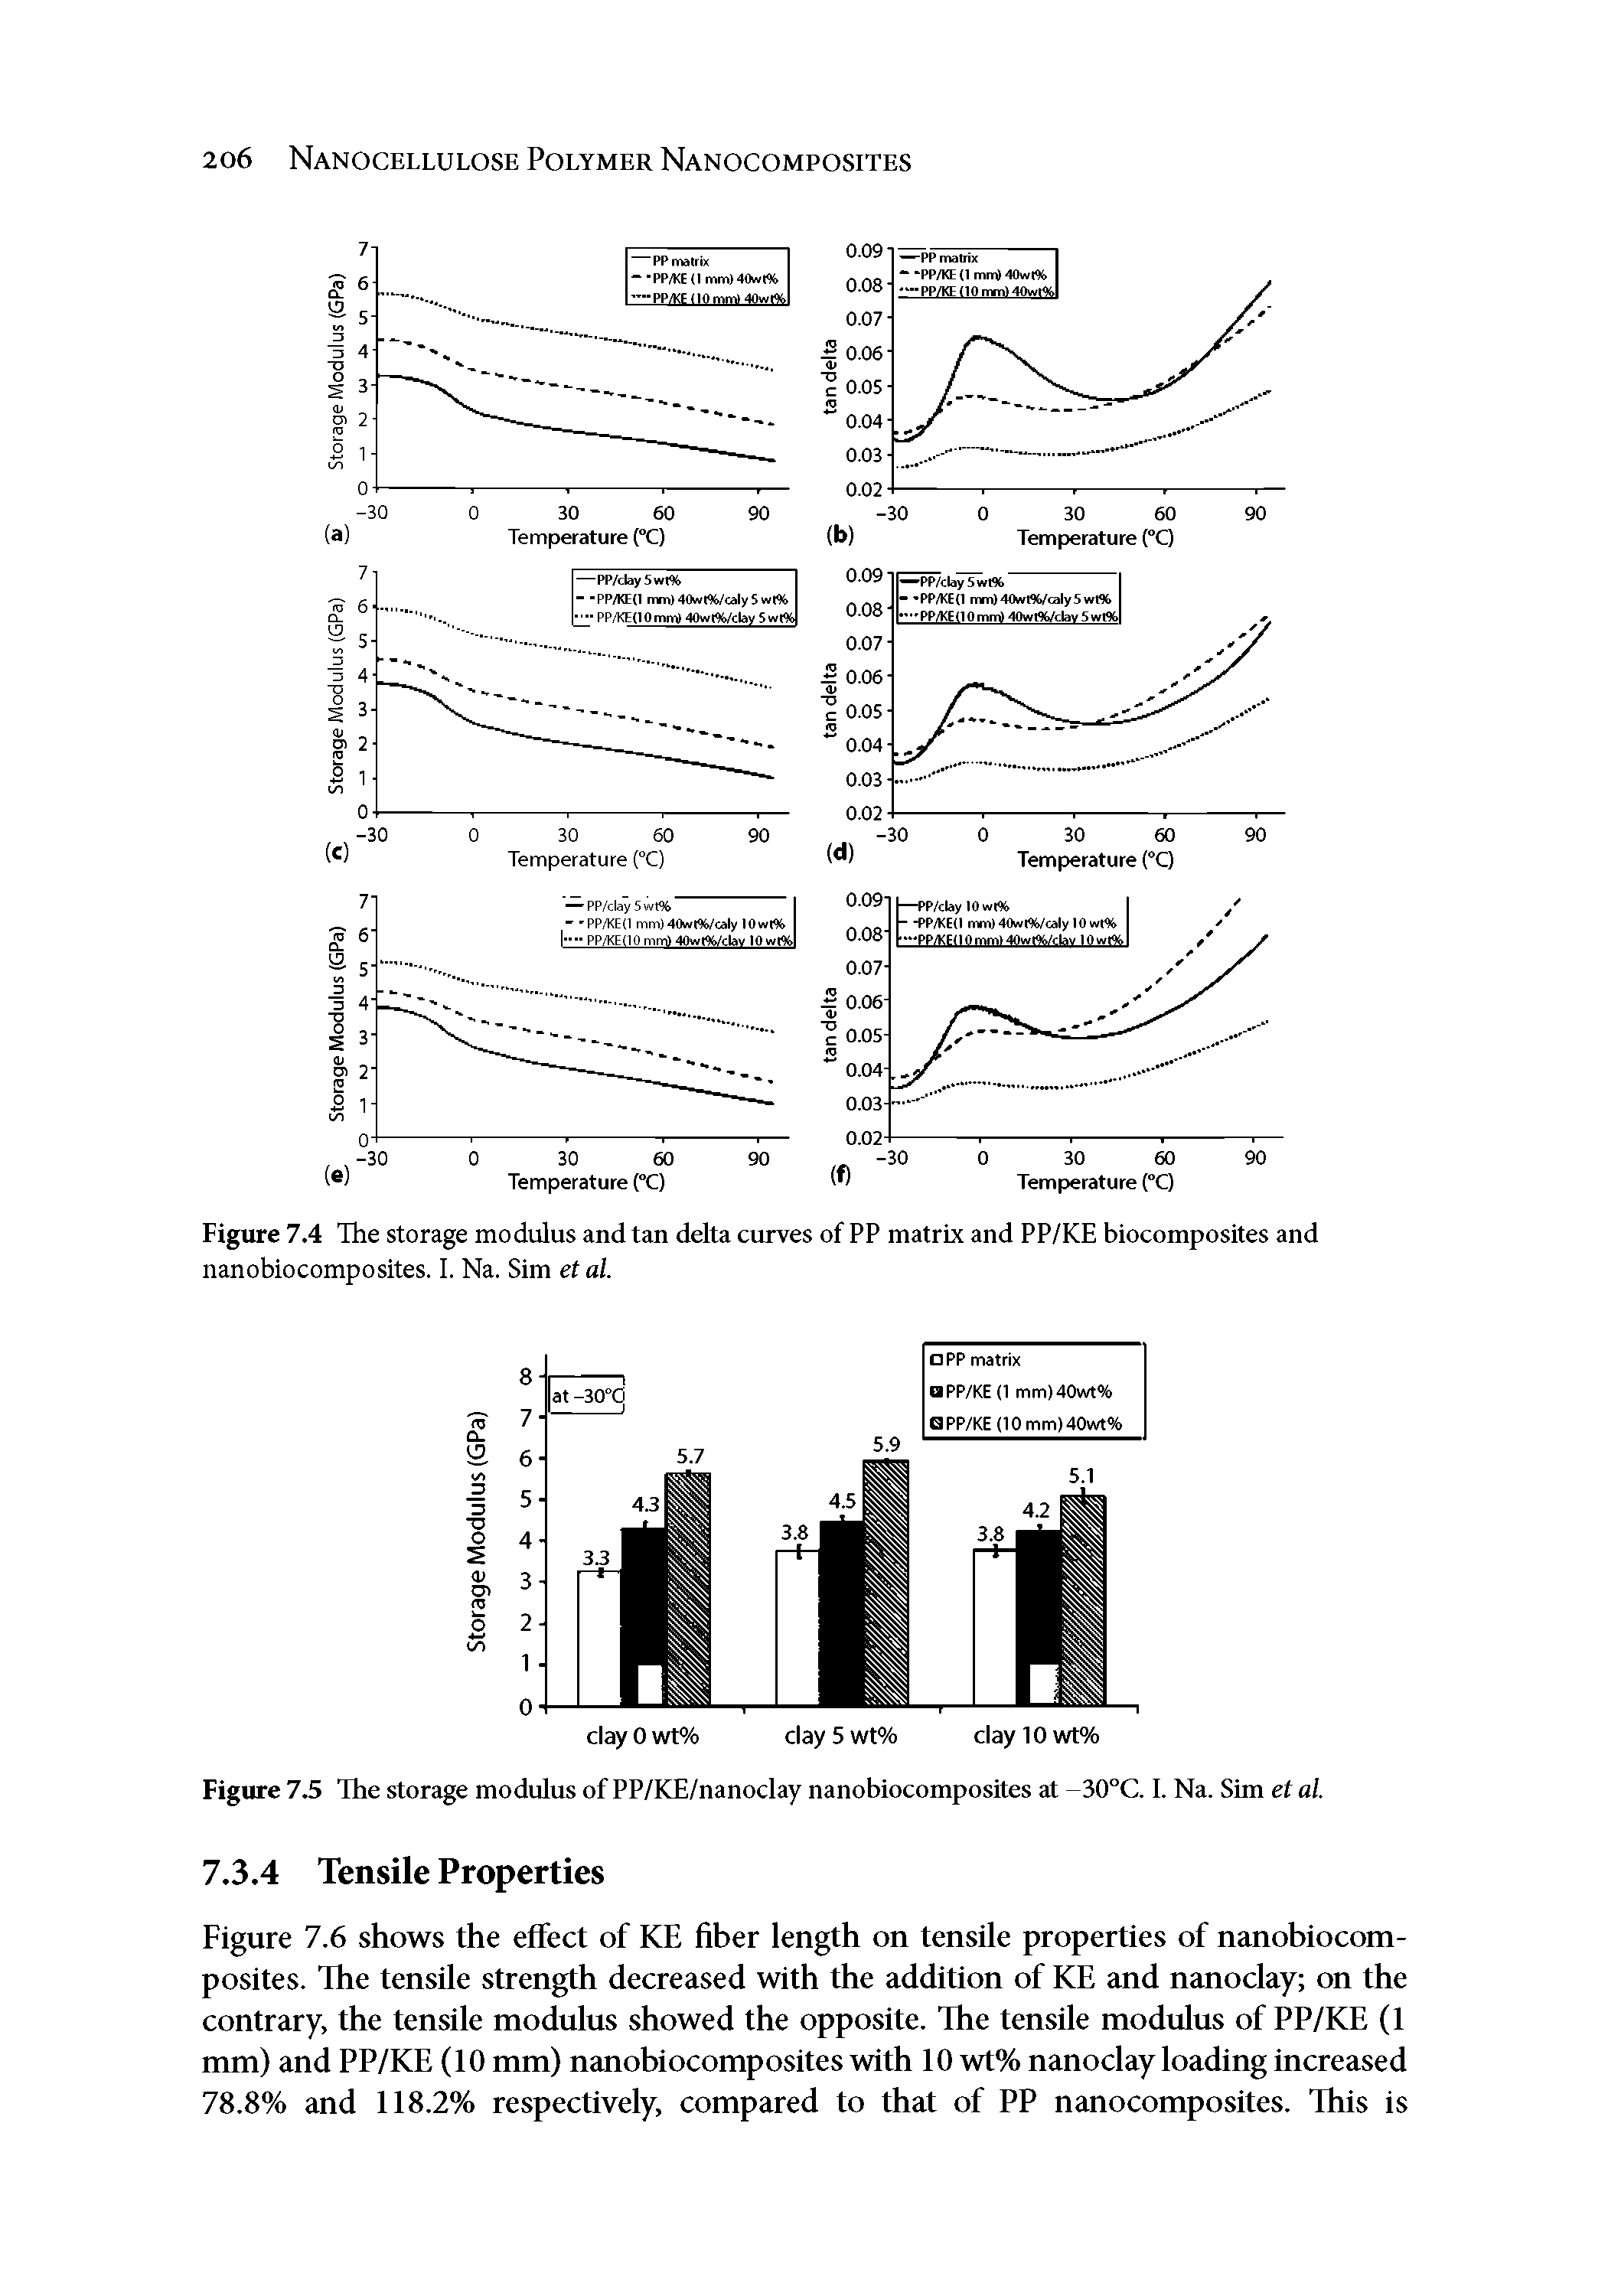 Figure 7.4 The storage modulus and tan delta curves of PP matrix and PP/KE biocomposites and nanobiocomposites. I. Na. Sim et al.